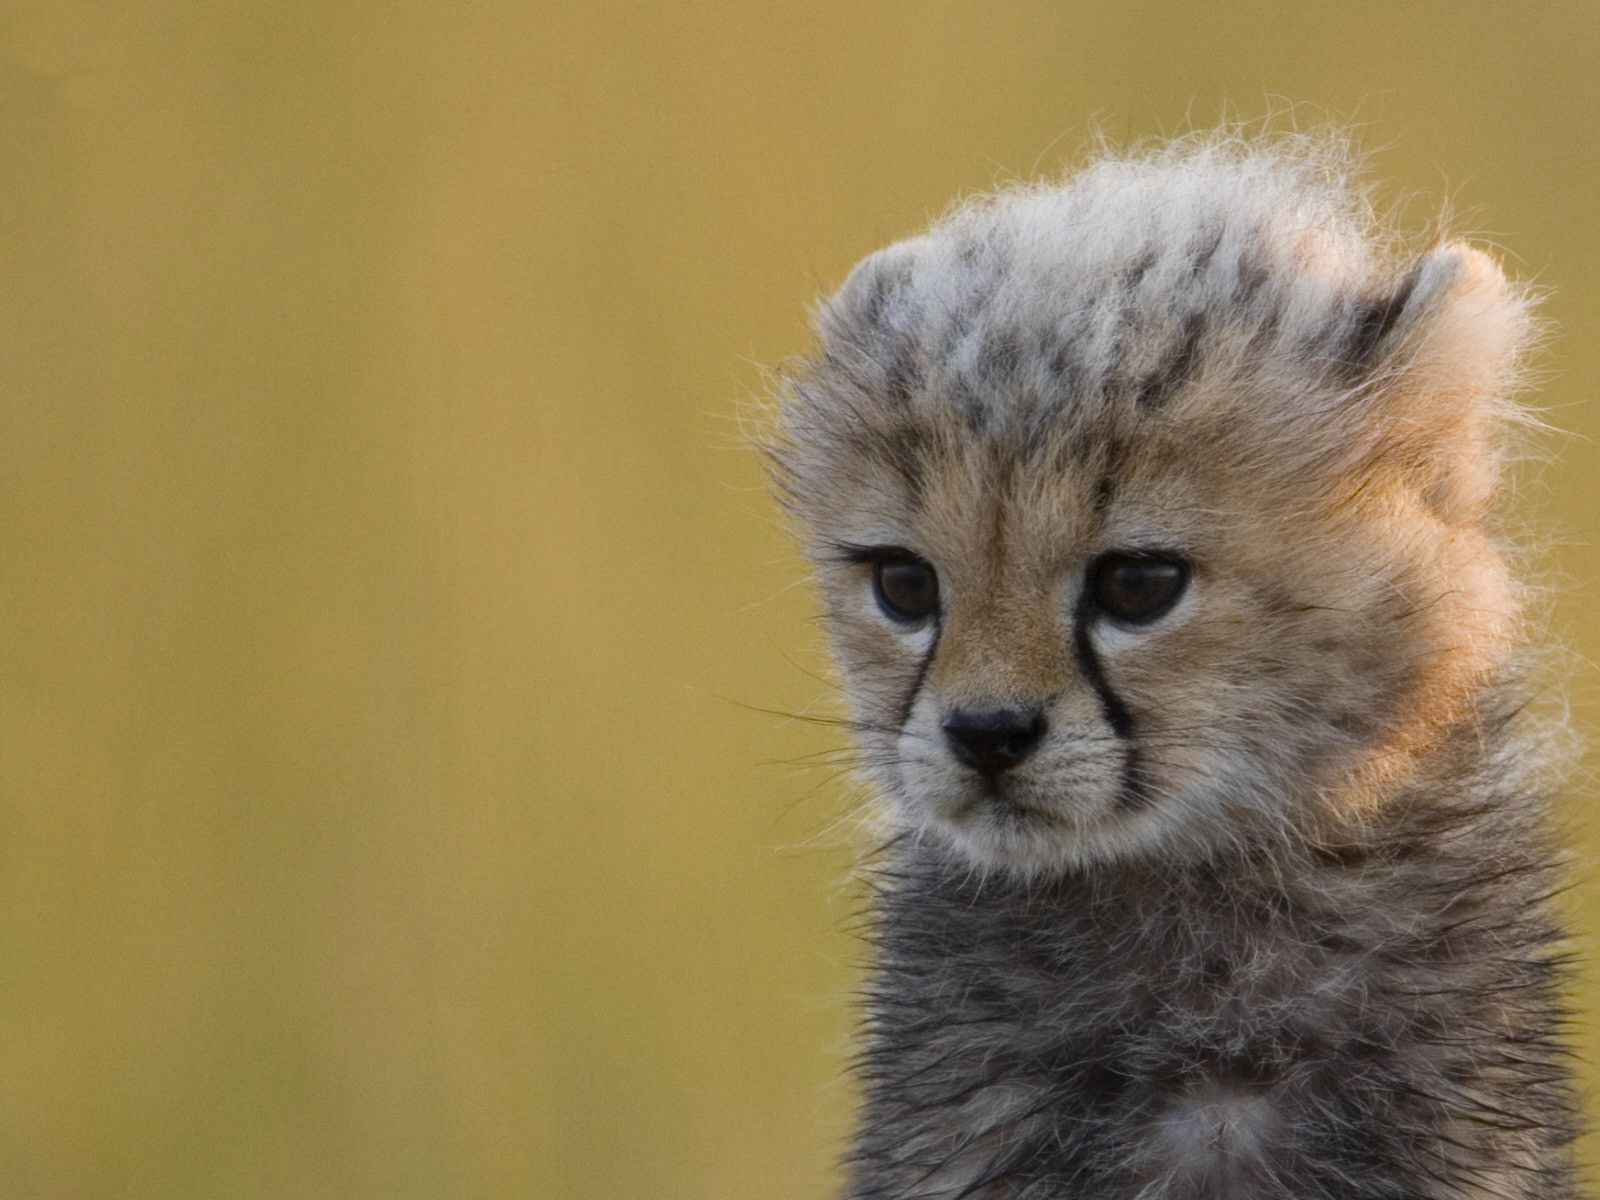 Cute Cheetah. Baby animals picture, Cute baby animals, Cute animals